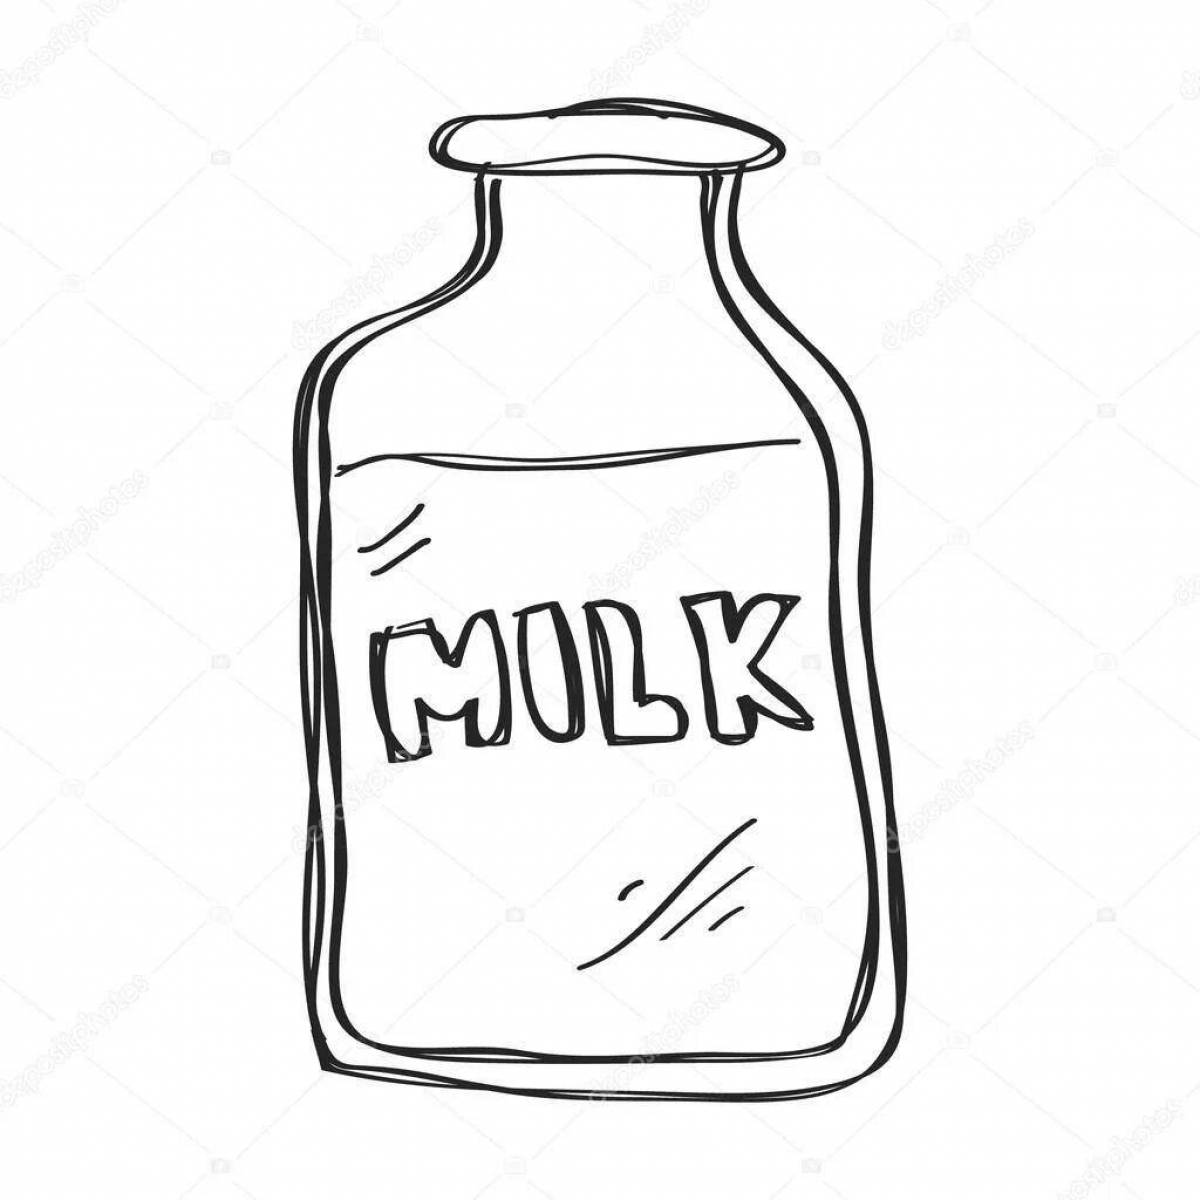 Rampant milk bottle coloring page